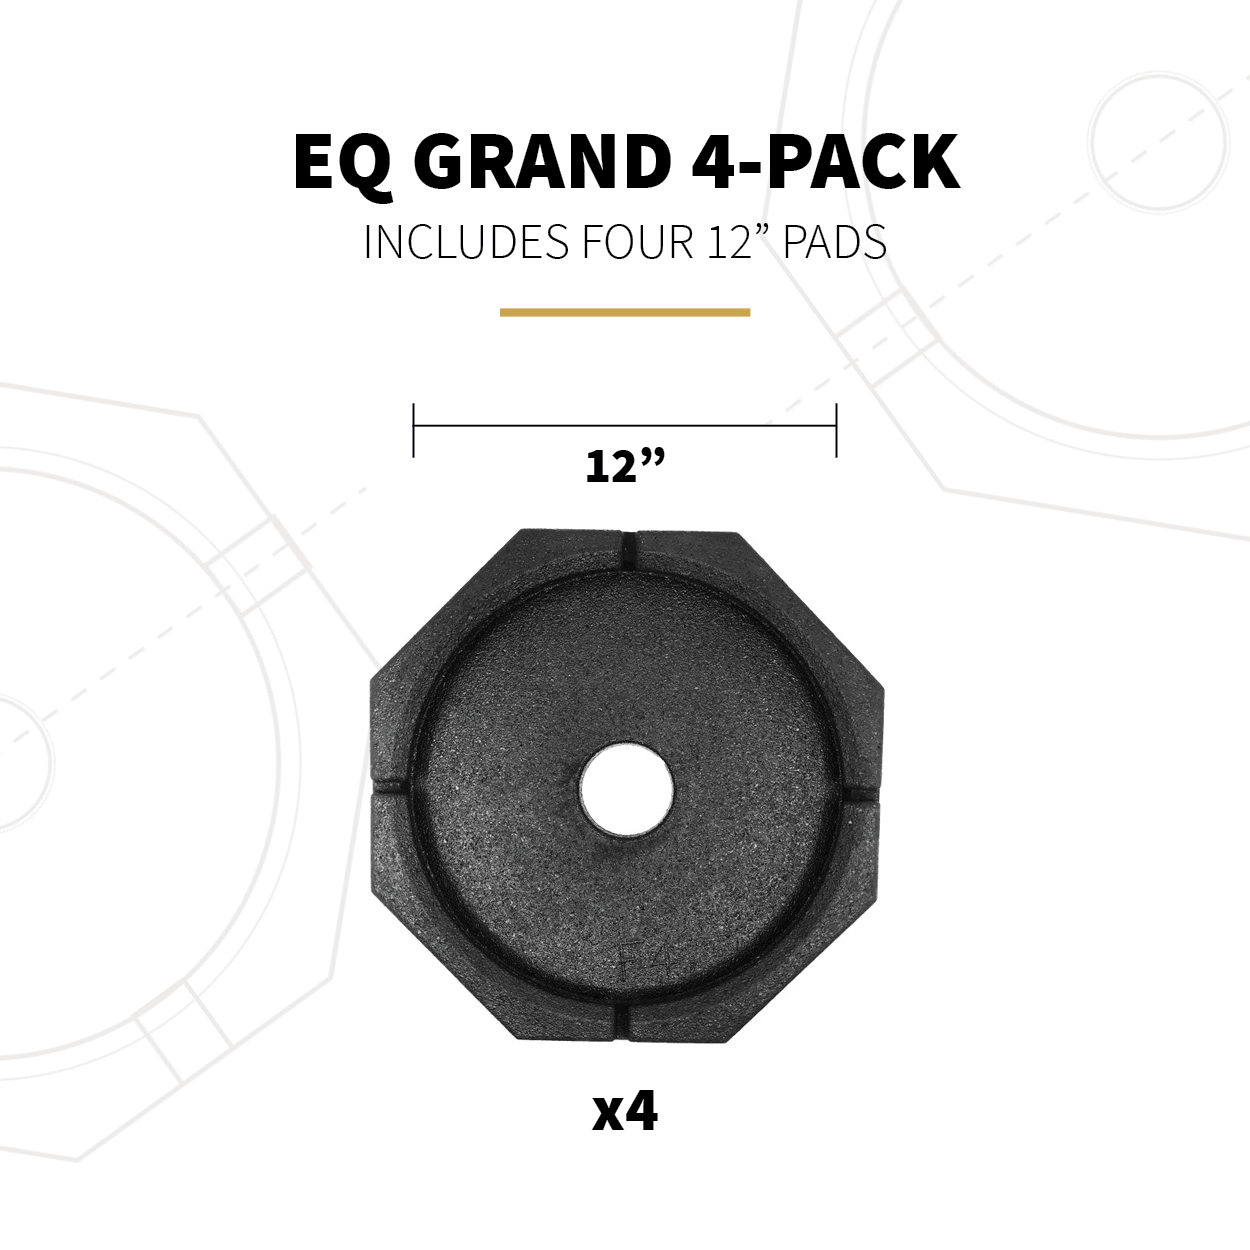 EQ Grand 4-Pack Specs